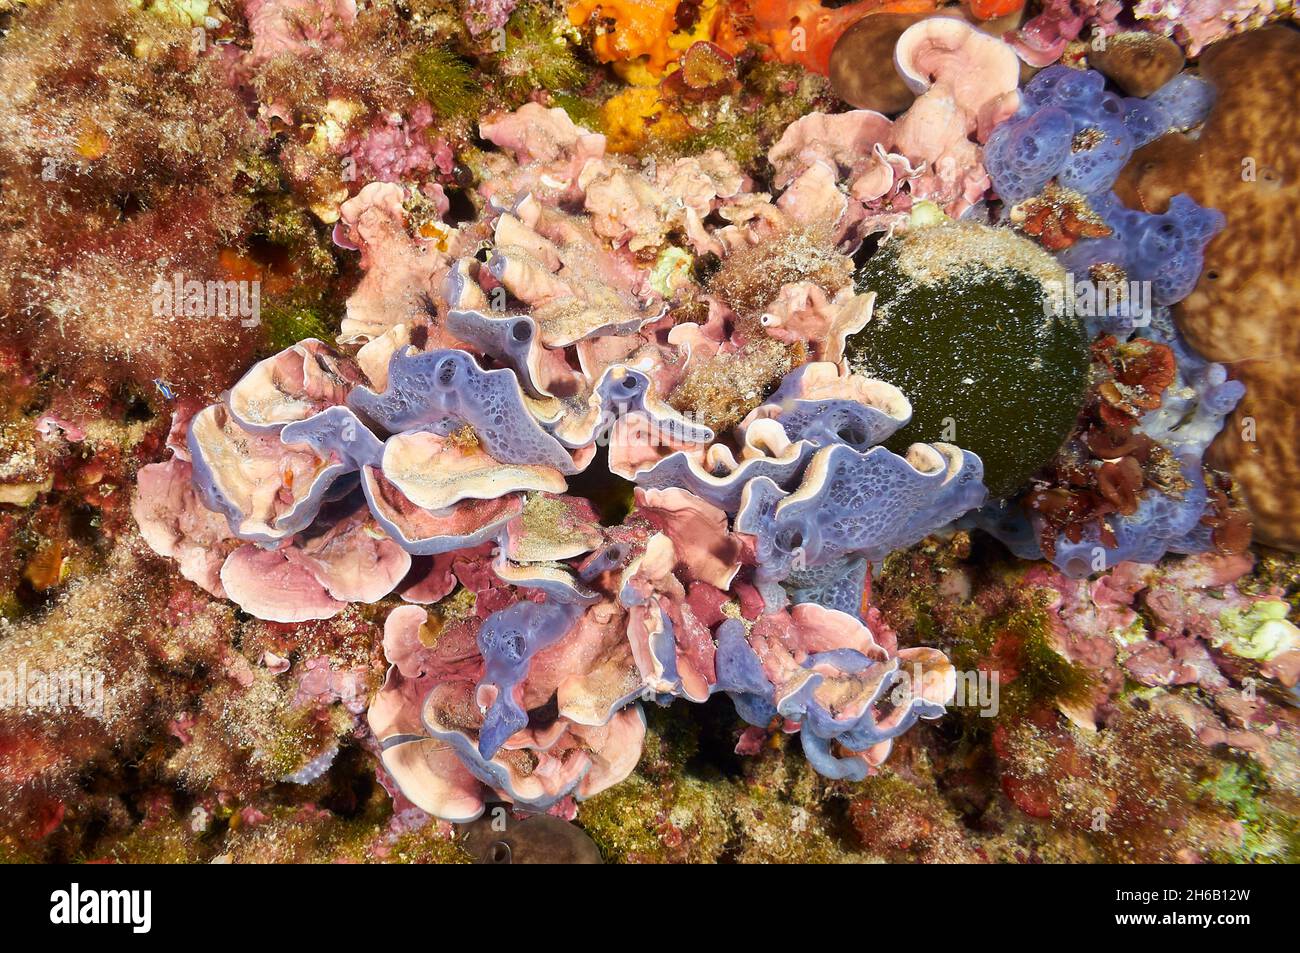 Spugna arrugginita bluastra (Phorbas tenacious) e alga rossa corallina (Mesophyllum lichenoides) nel Parco Naturale di Ses Salines (Mar Mediterraneo, Spagna) Foto Stock